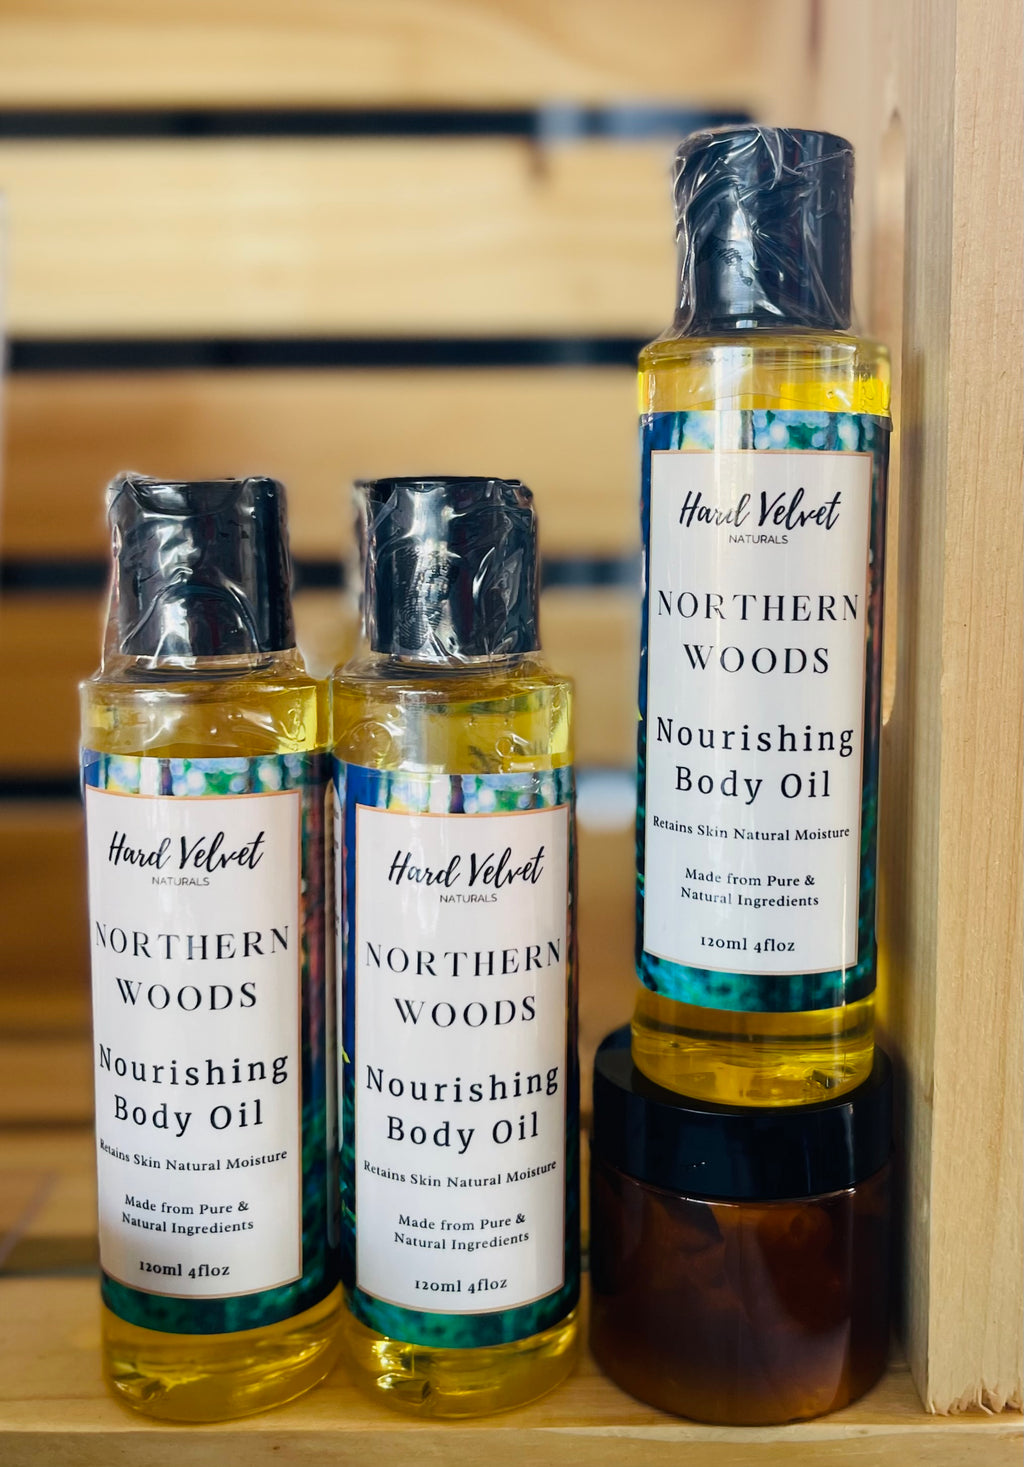 Northern Woods Nourishing Body Oil